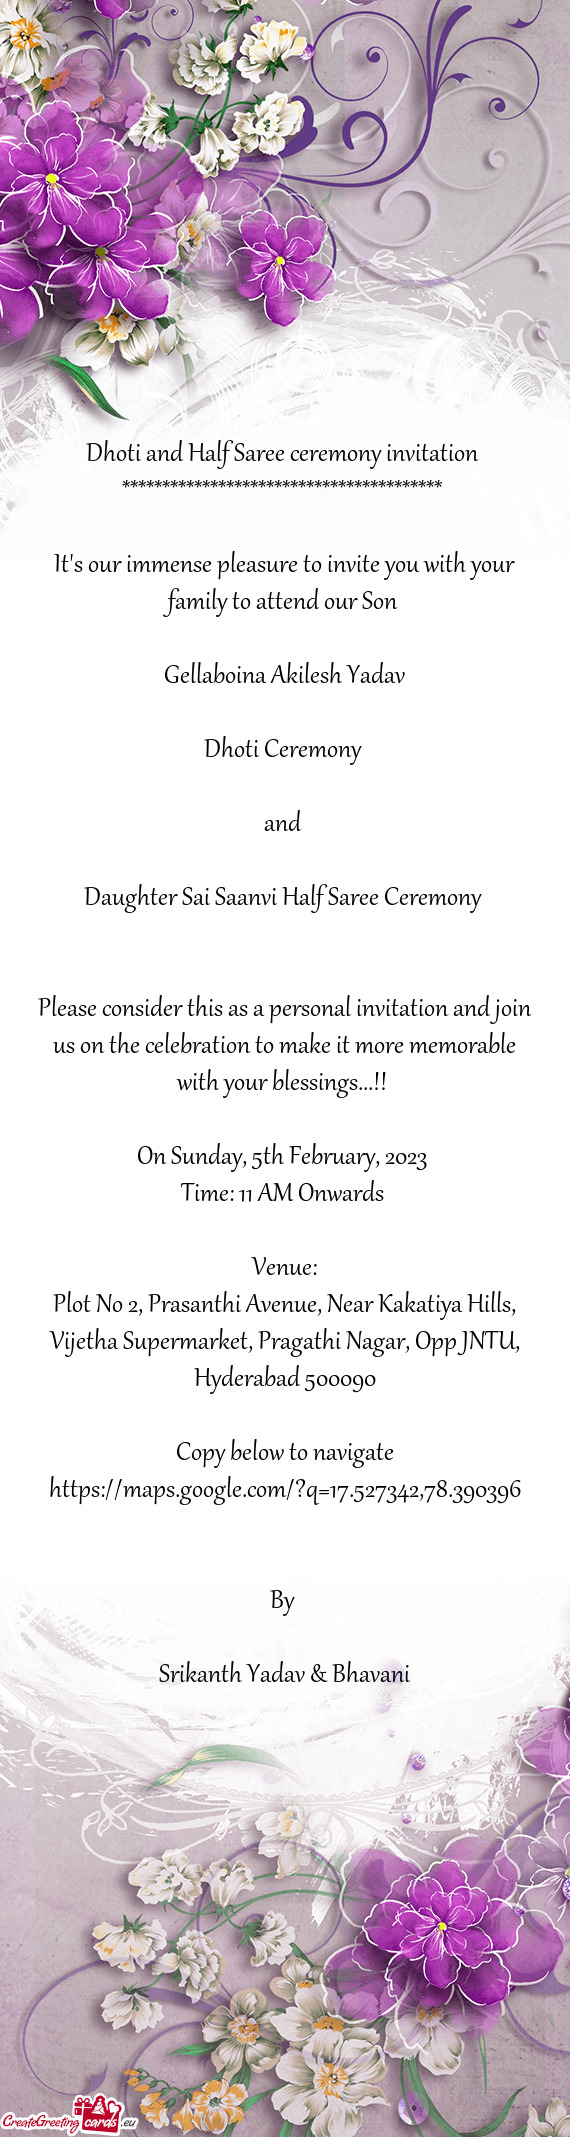 Daughter Sai Saanvi Half Saree Ceremony